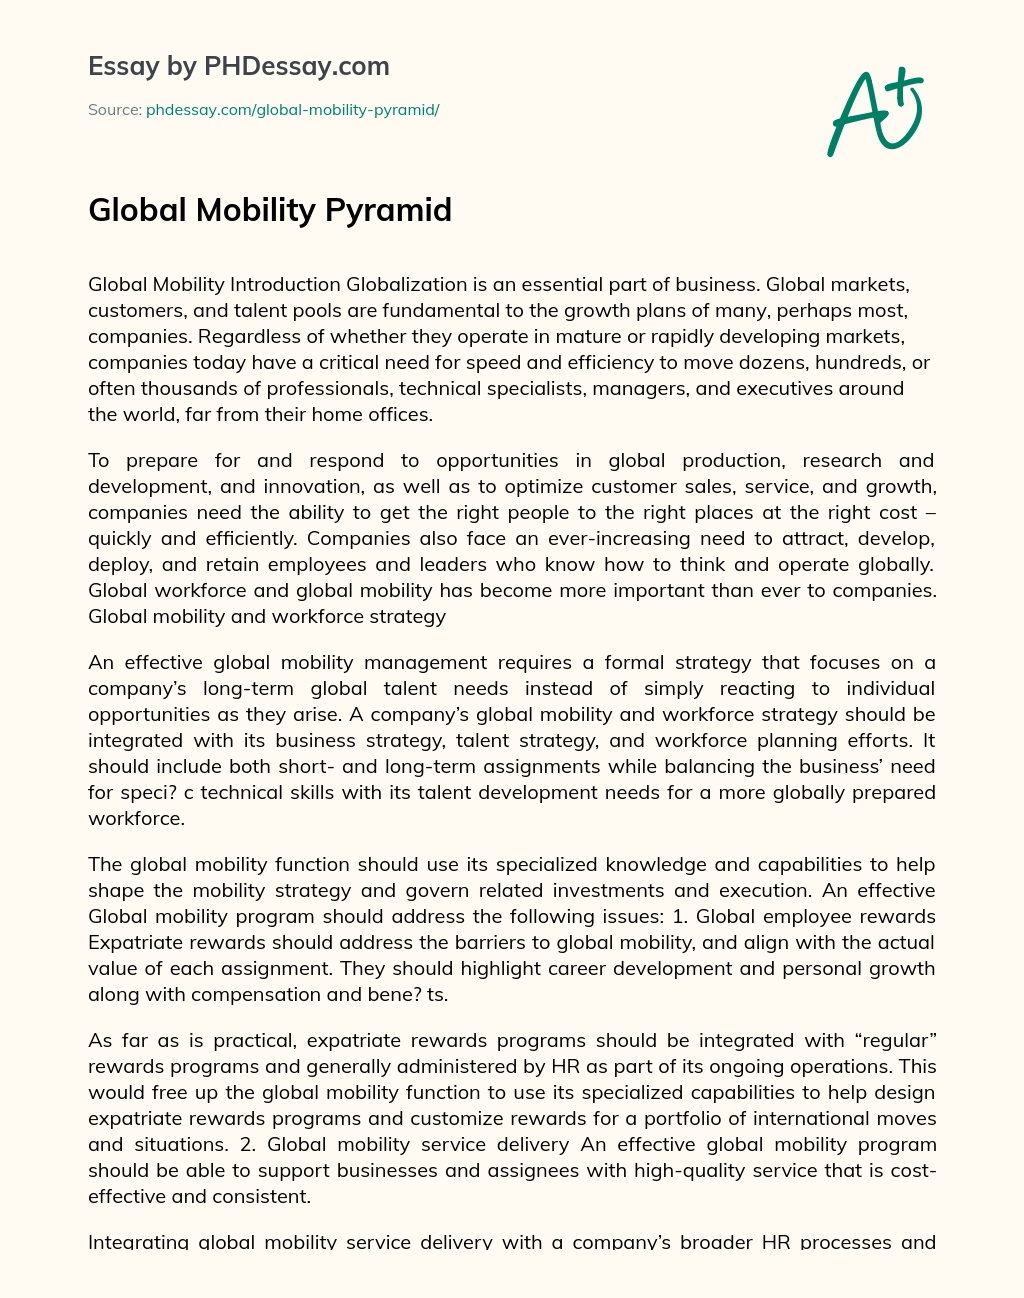 Global Mobility Pyramid essay